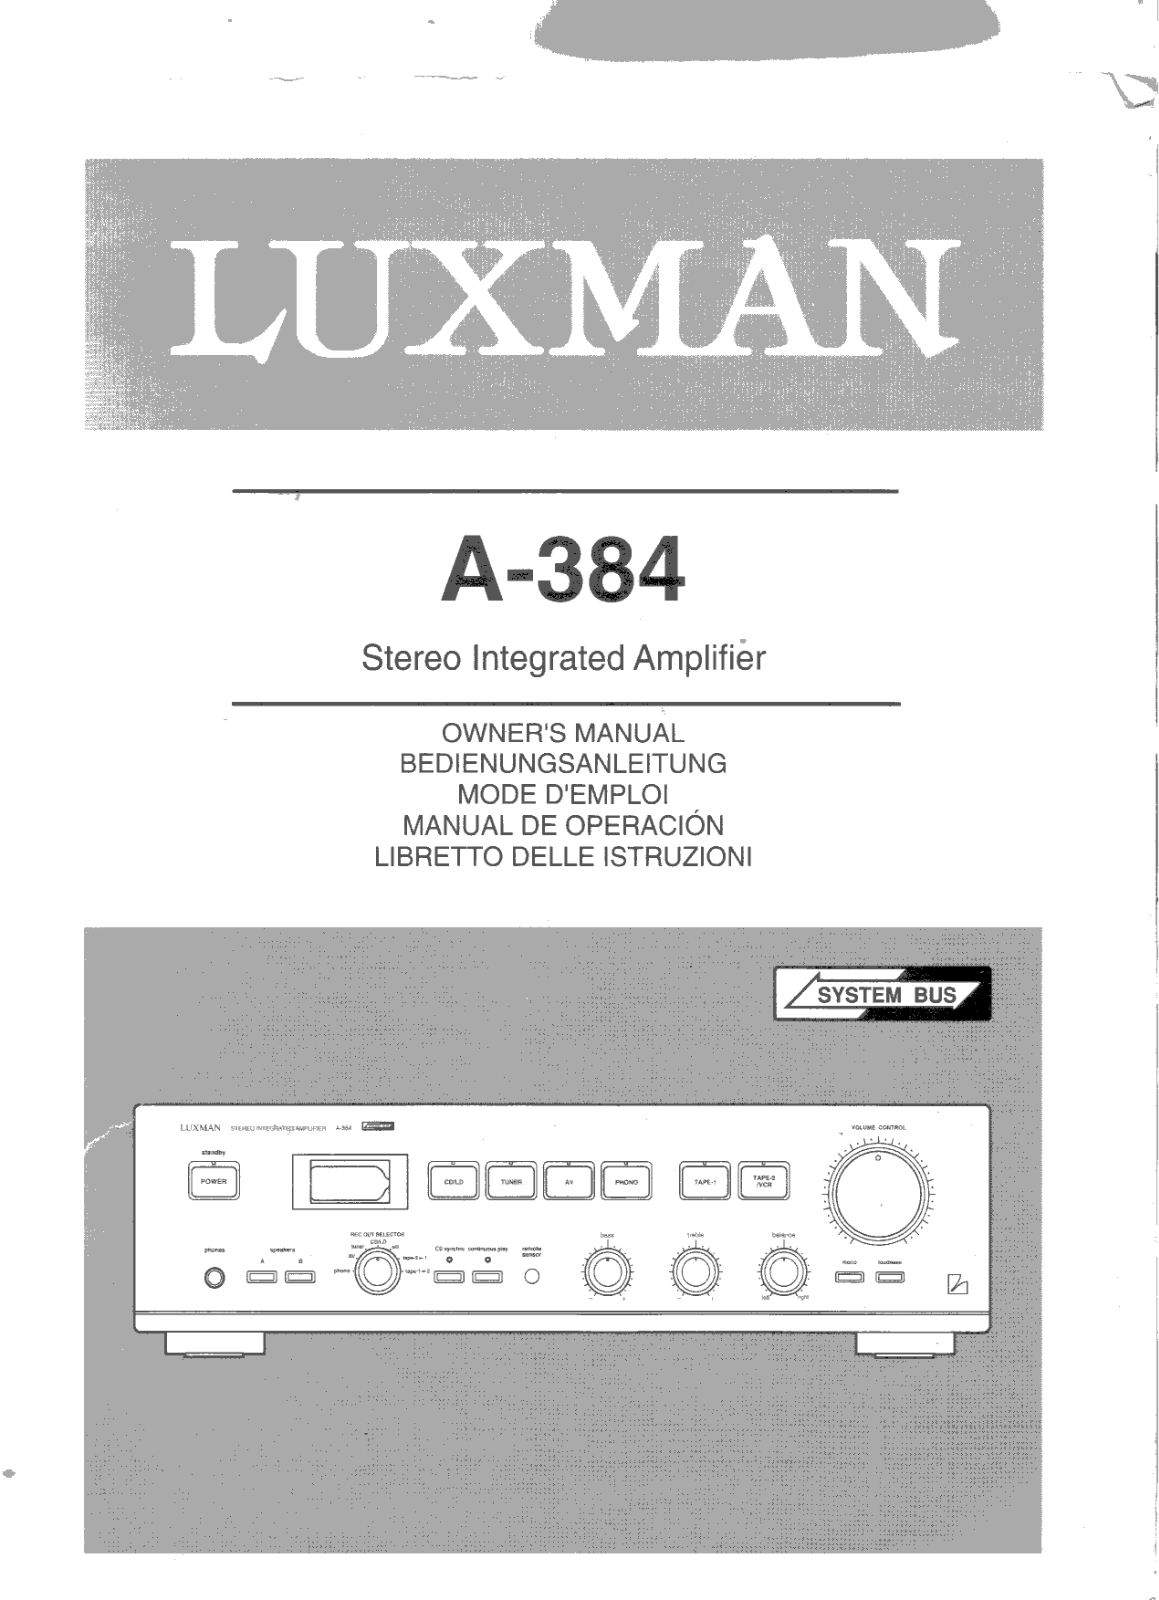 LUXMAN A-384 User Manual